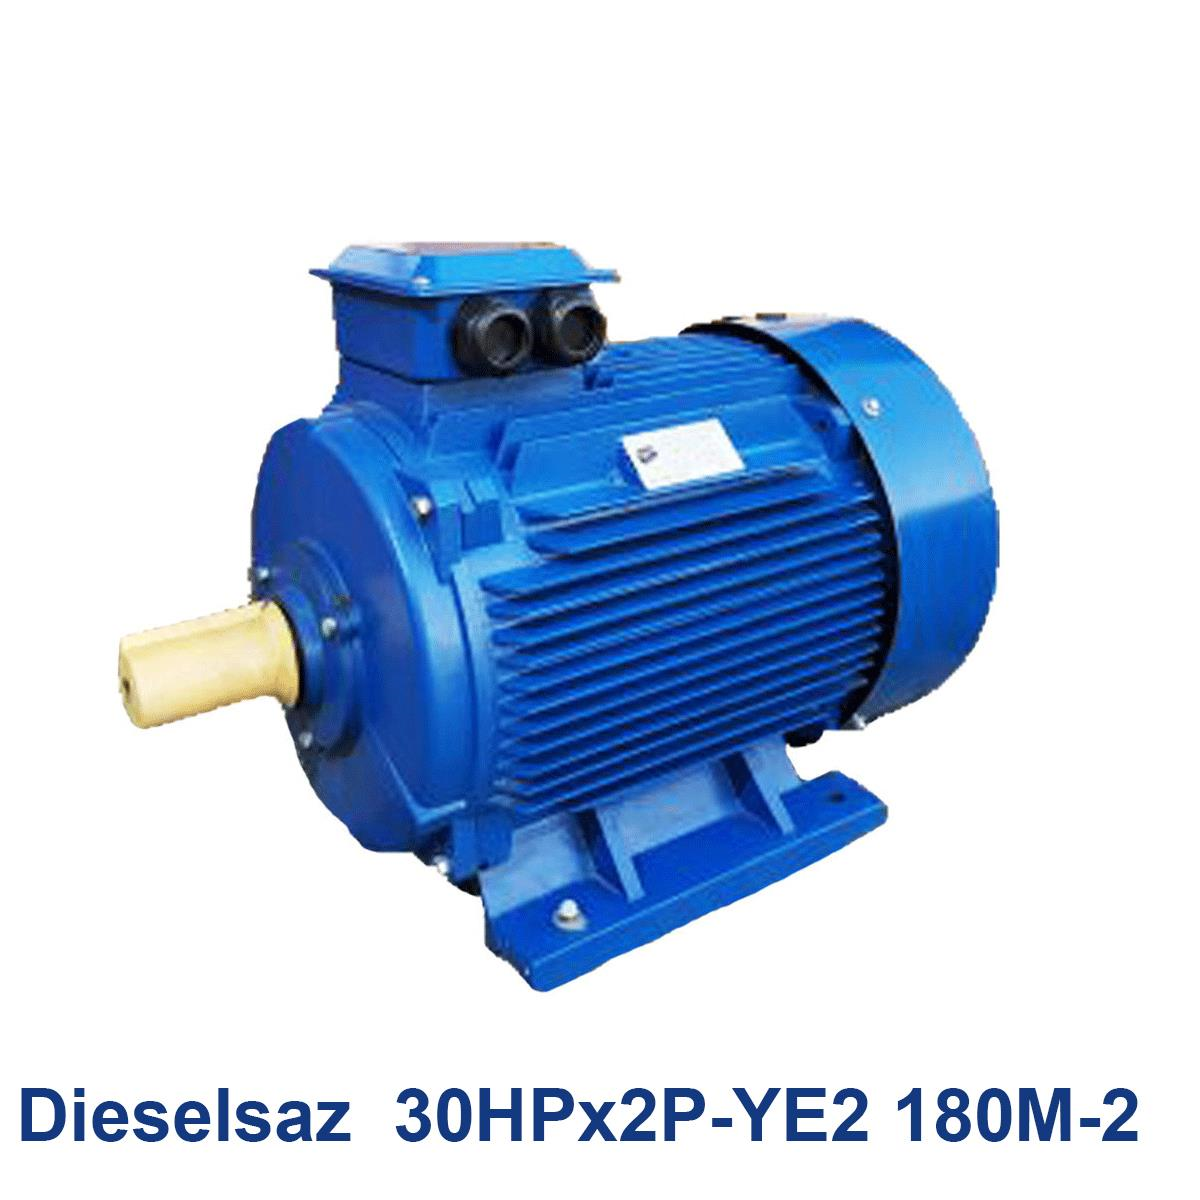 Dieselsaz--30HPx2P-YE2-180M-2